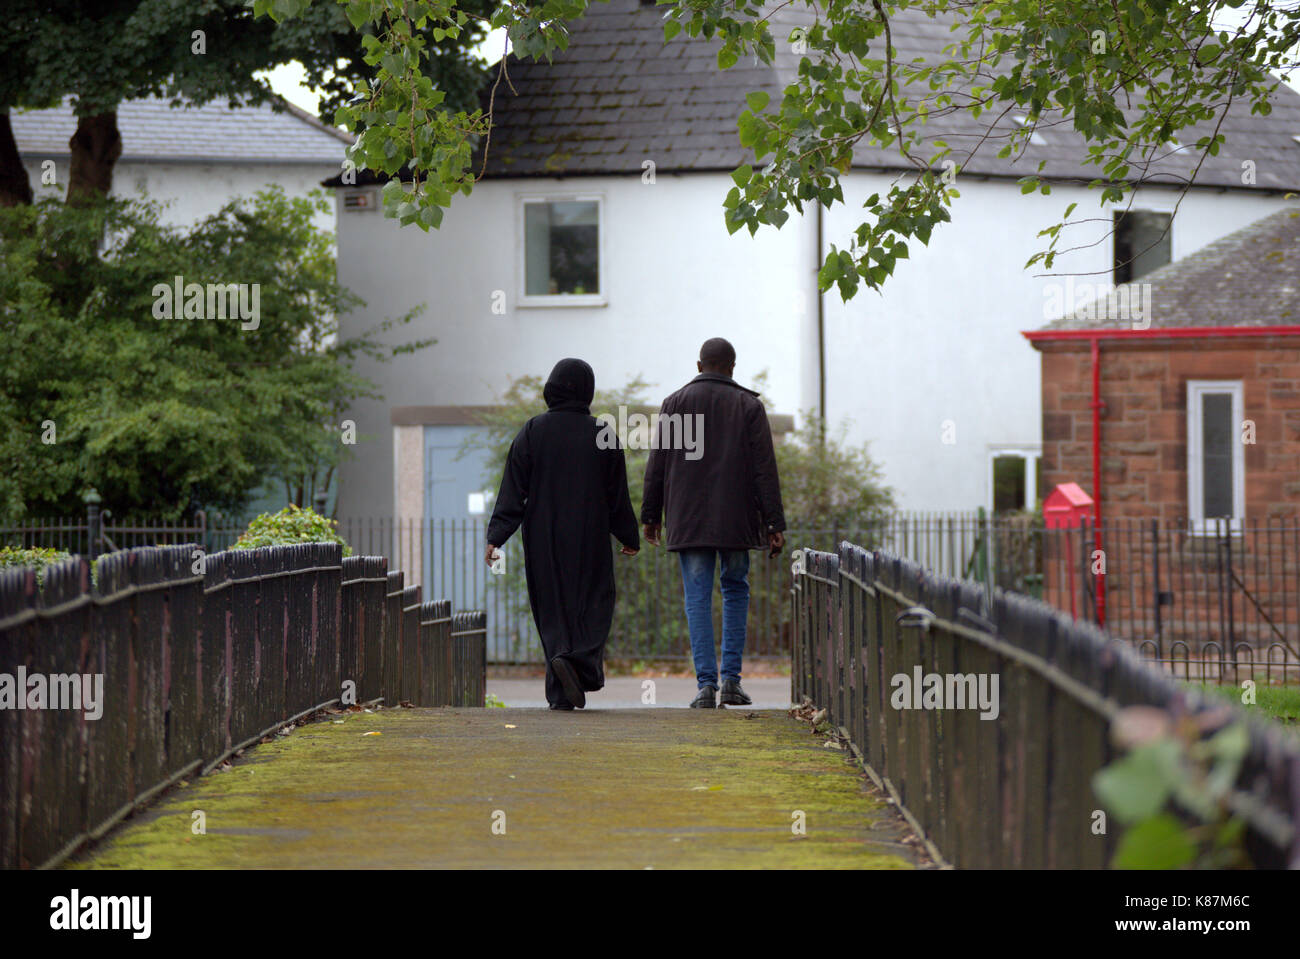 refugee immigrant moslem Muslim couple wearing burka walking on path fenced in, suburban setting Stock Photo